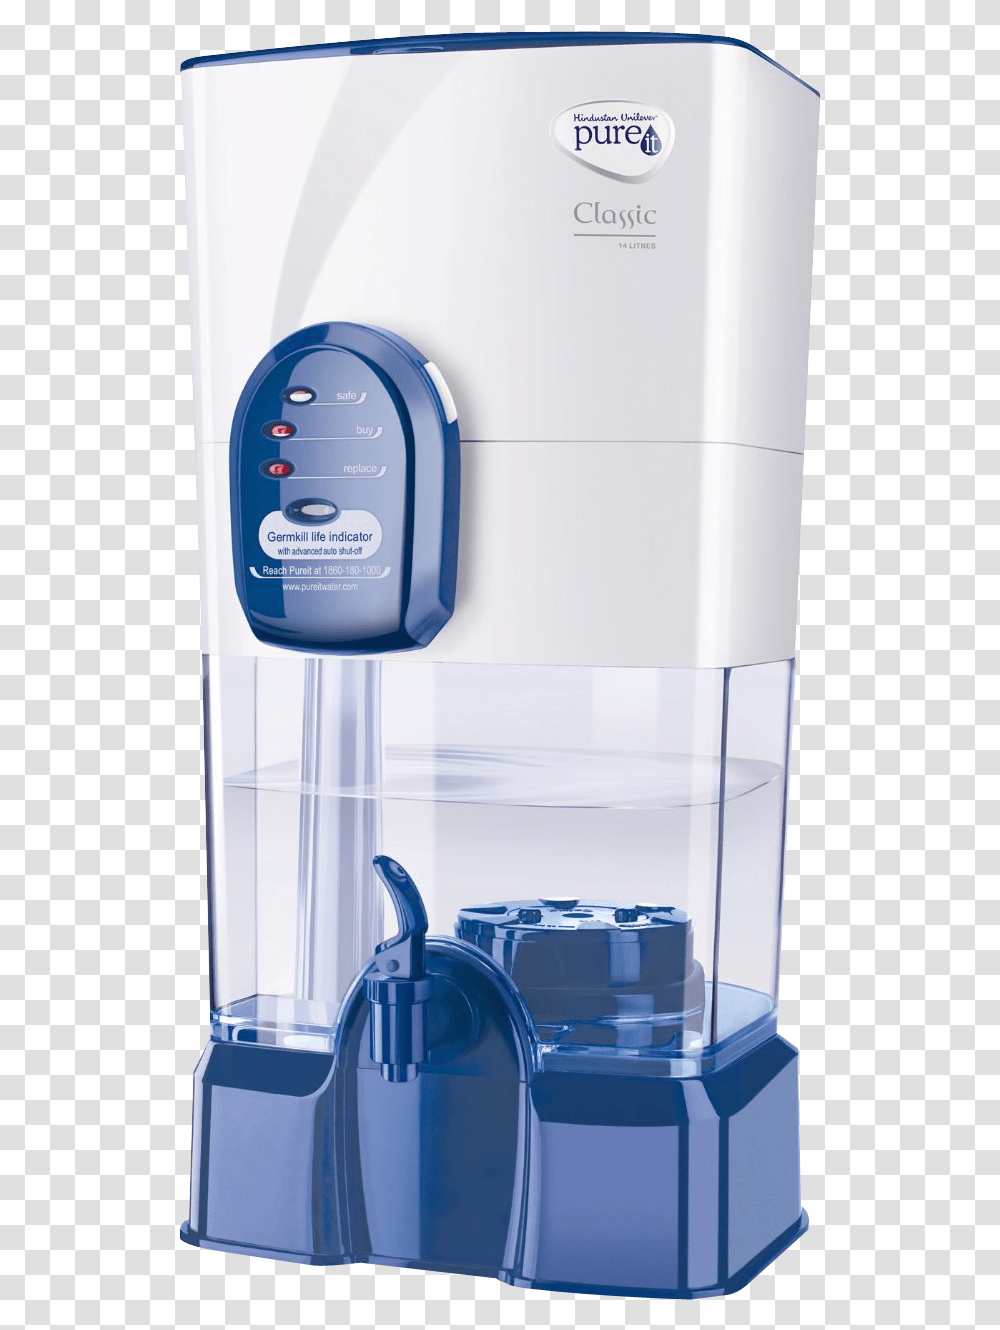 New Water Purifier Image Ro 14 Litre Pureit Classic, Appliance, Bottle, Mouse, Hardware Transparent Png